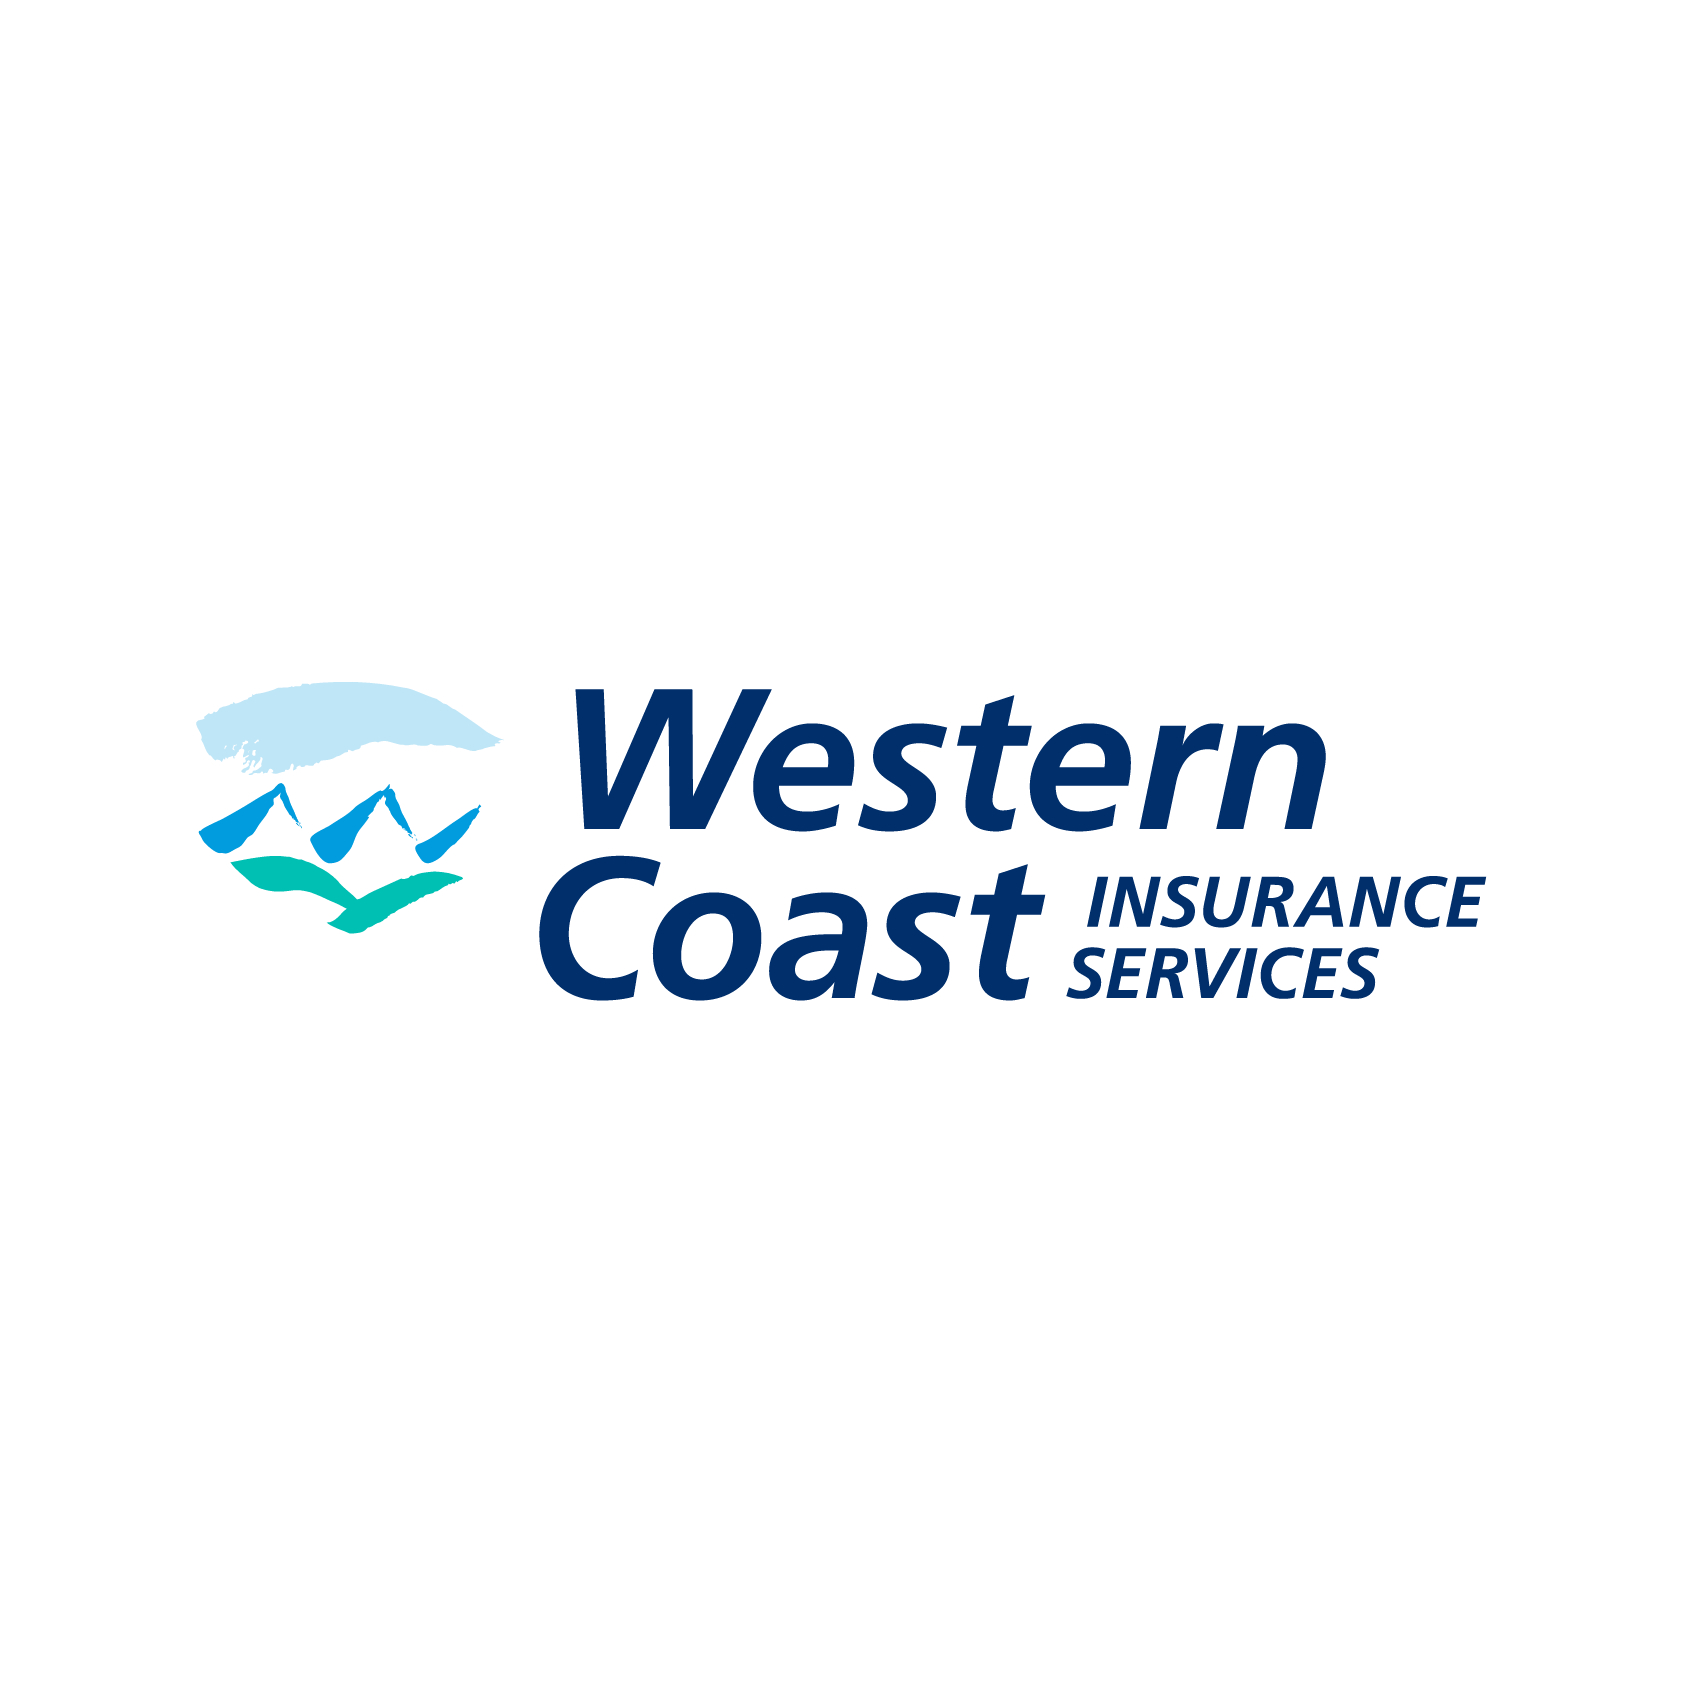 Western Coast Insurance Services Ltd. - Assurance